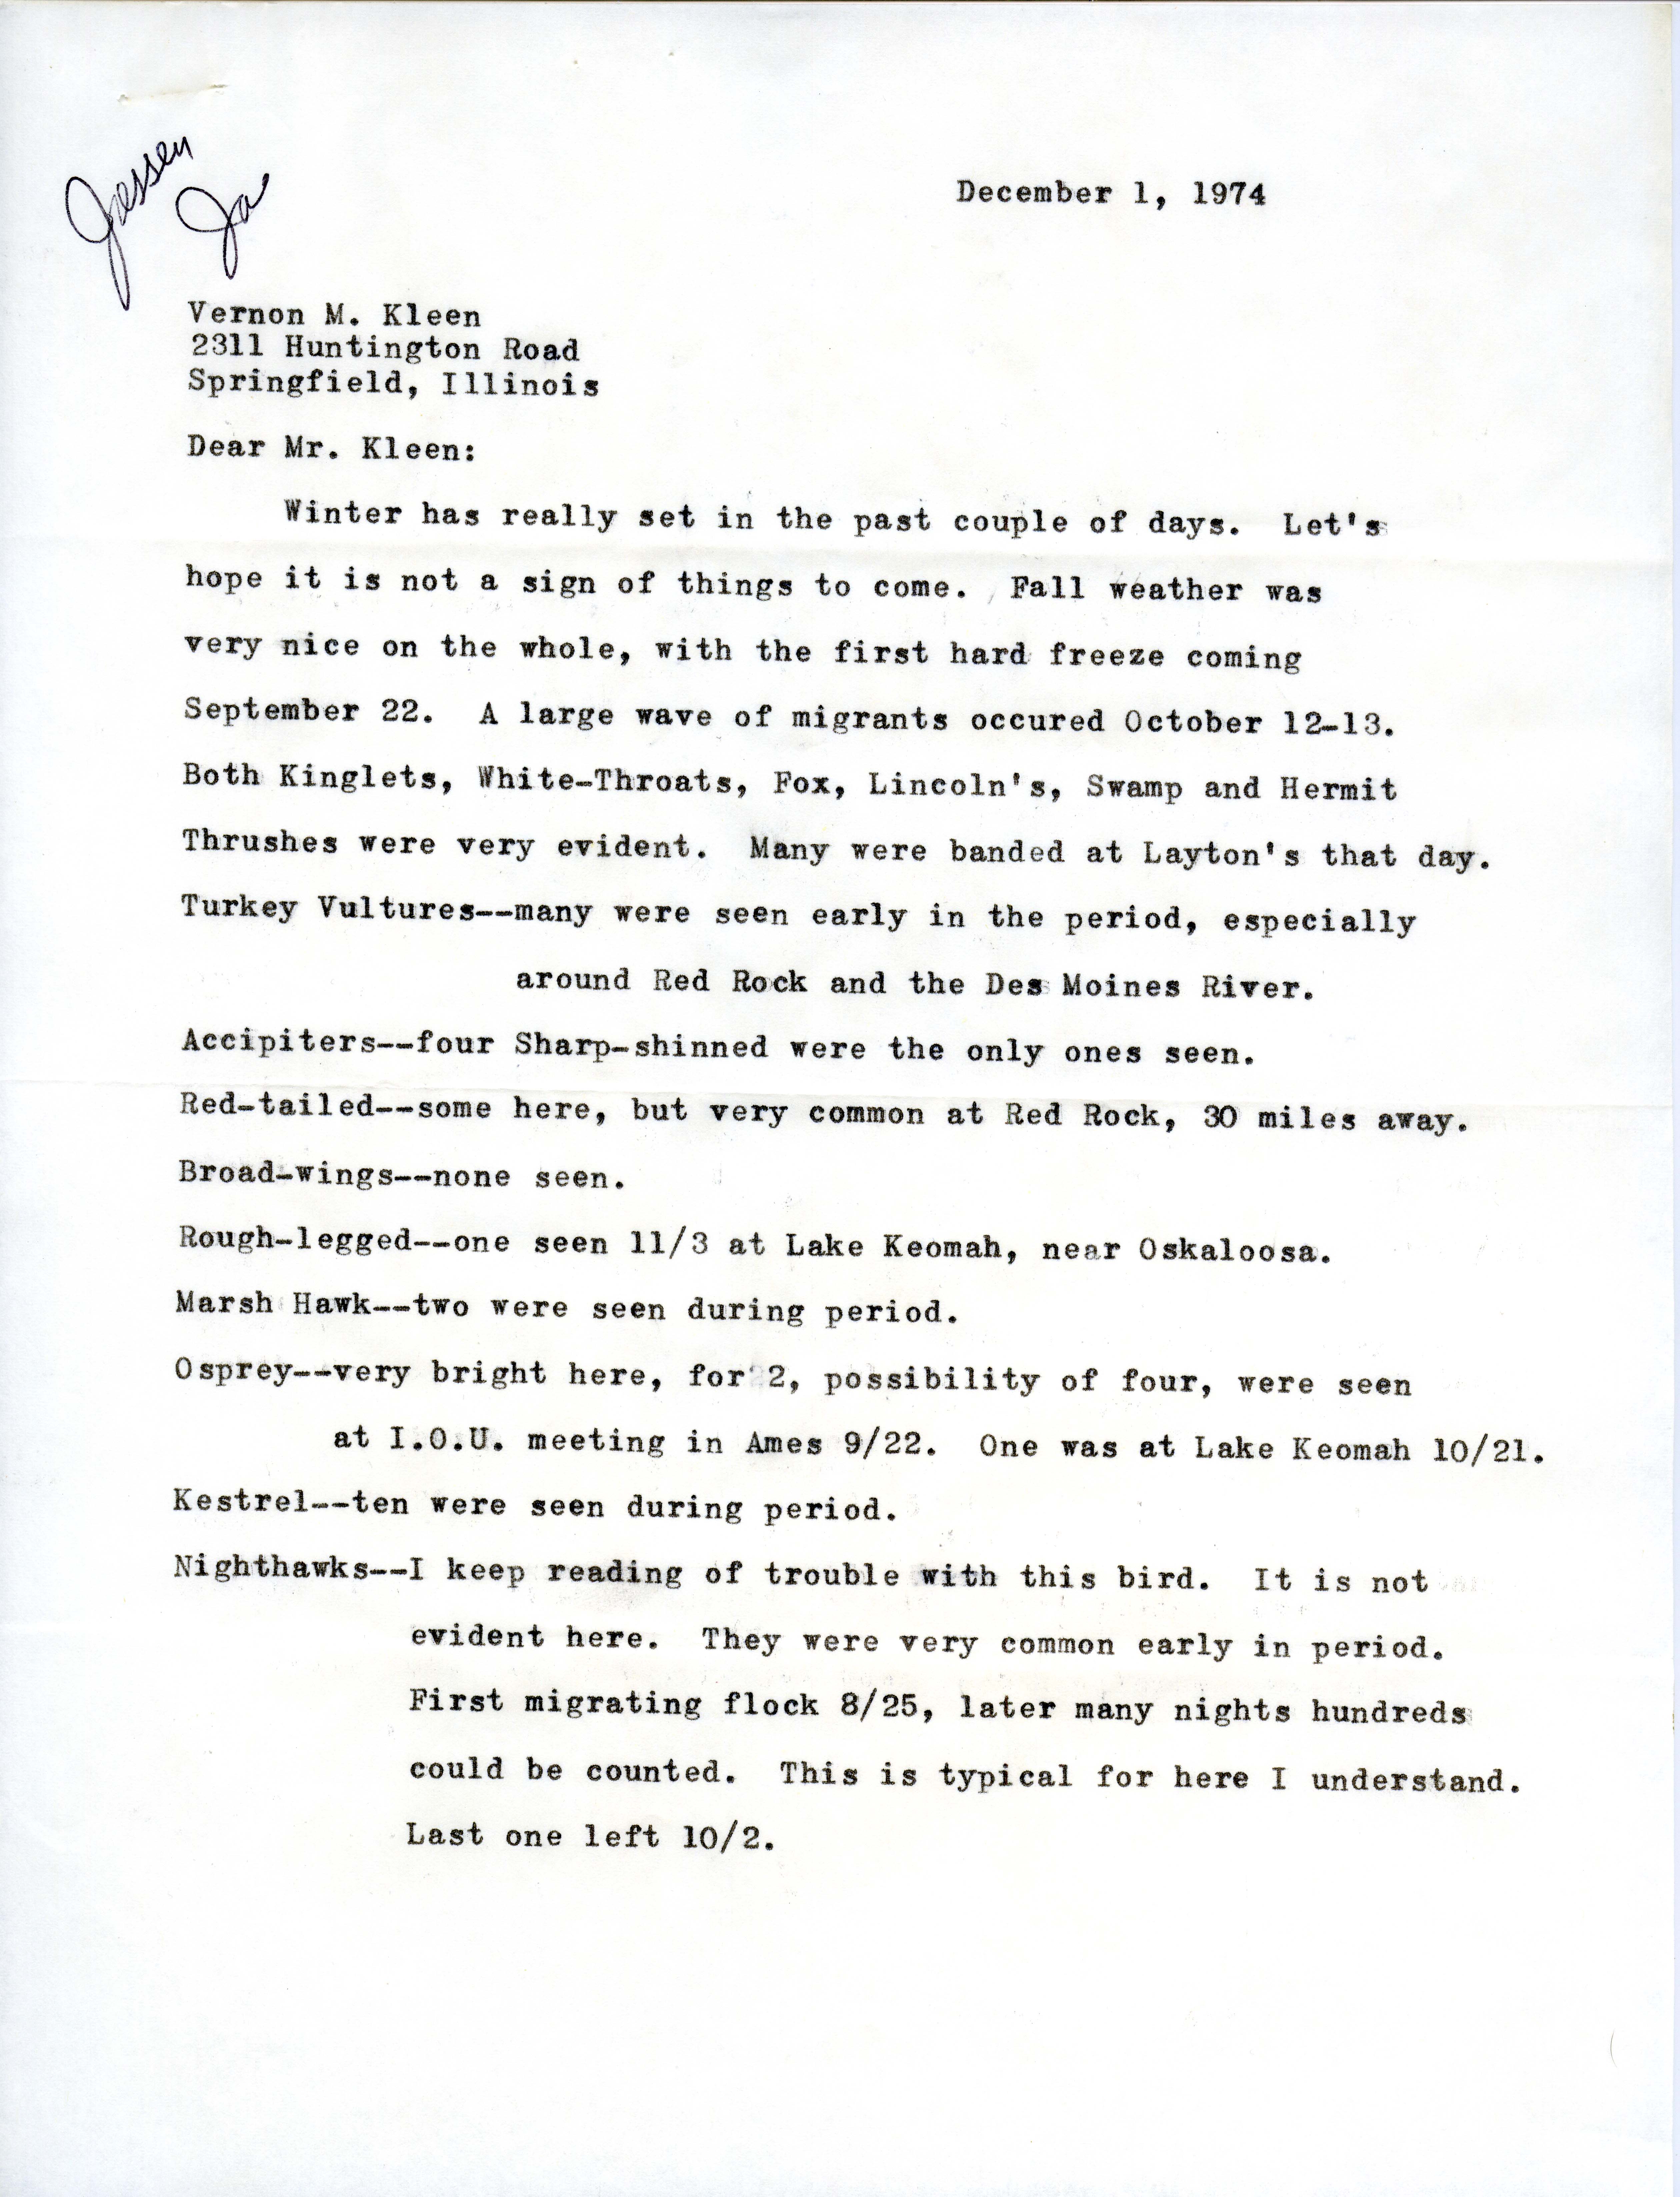 Robert Jessen letter and checklist to Vernon M. Kleen regarding birds sighted during 1974 fall migration, December 1, 1974